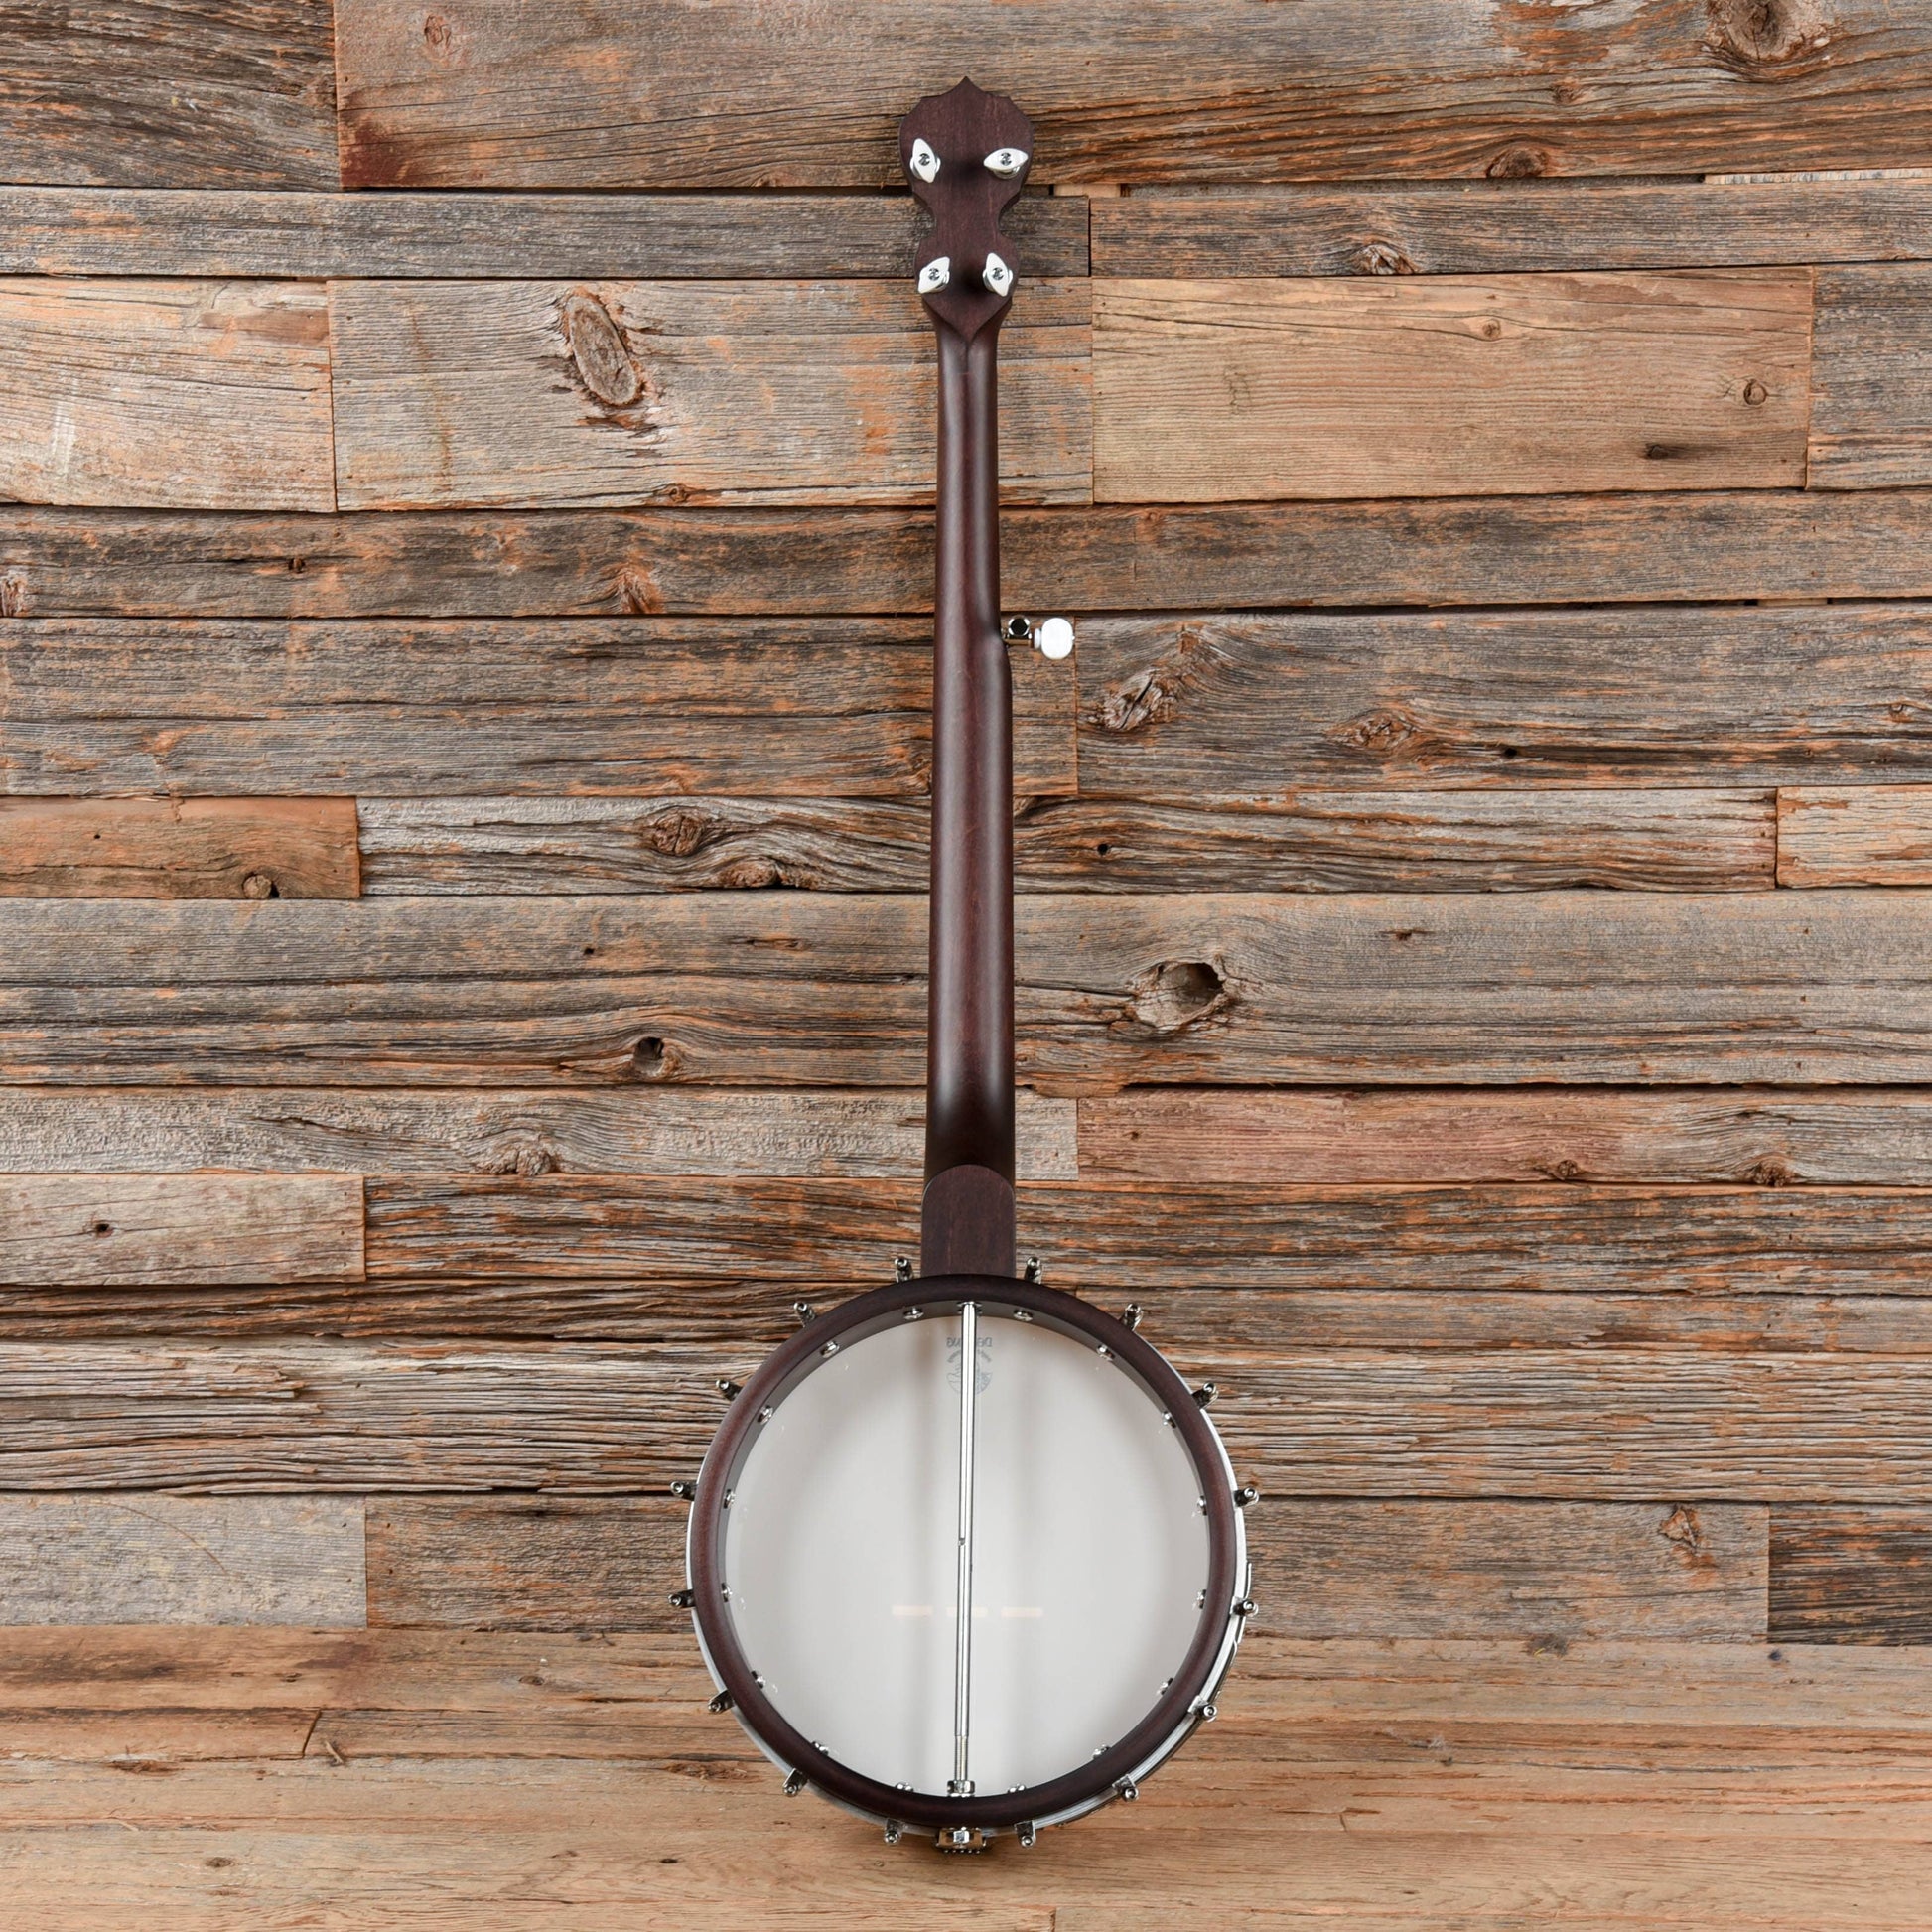 Deering Artisan Goodtime Openback 5-String Banjo Natural Folk Instruments / Banjos